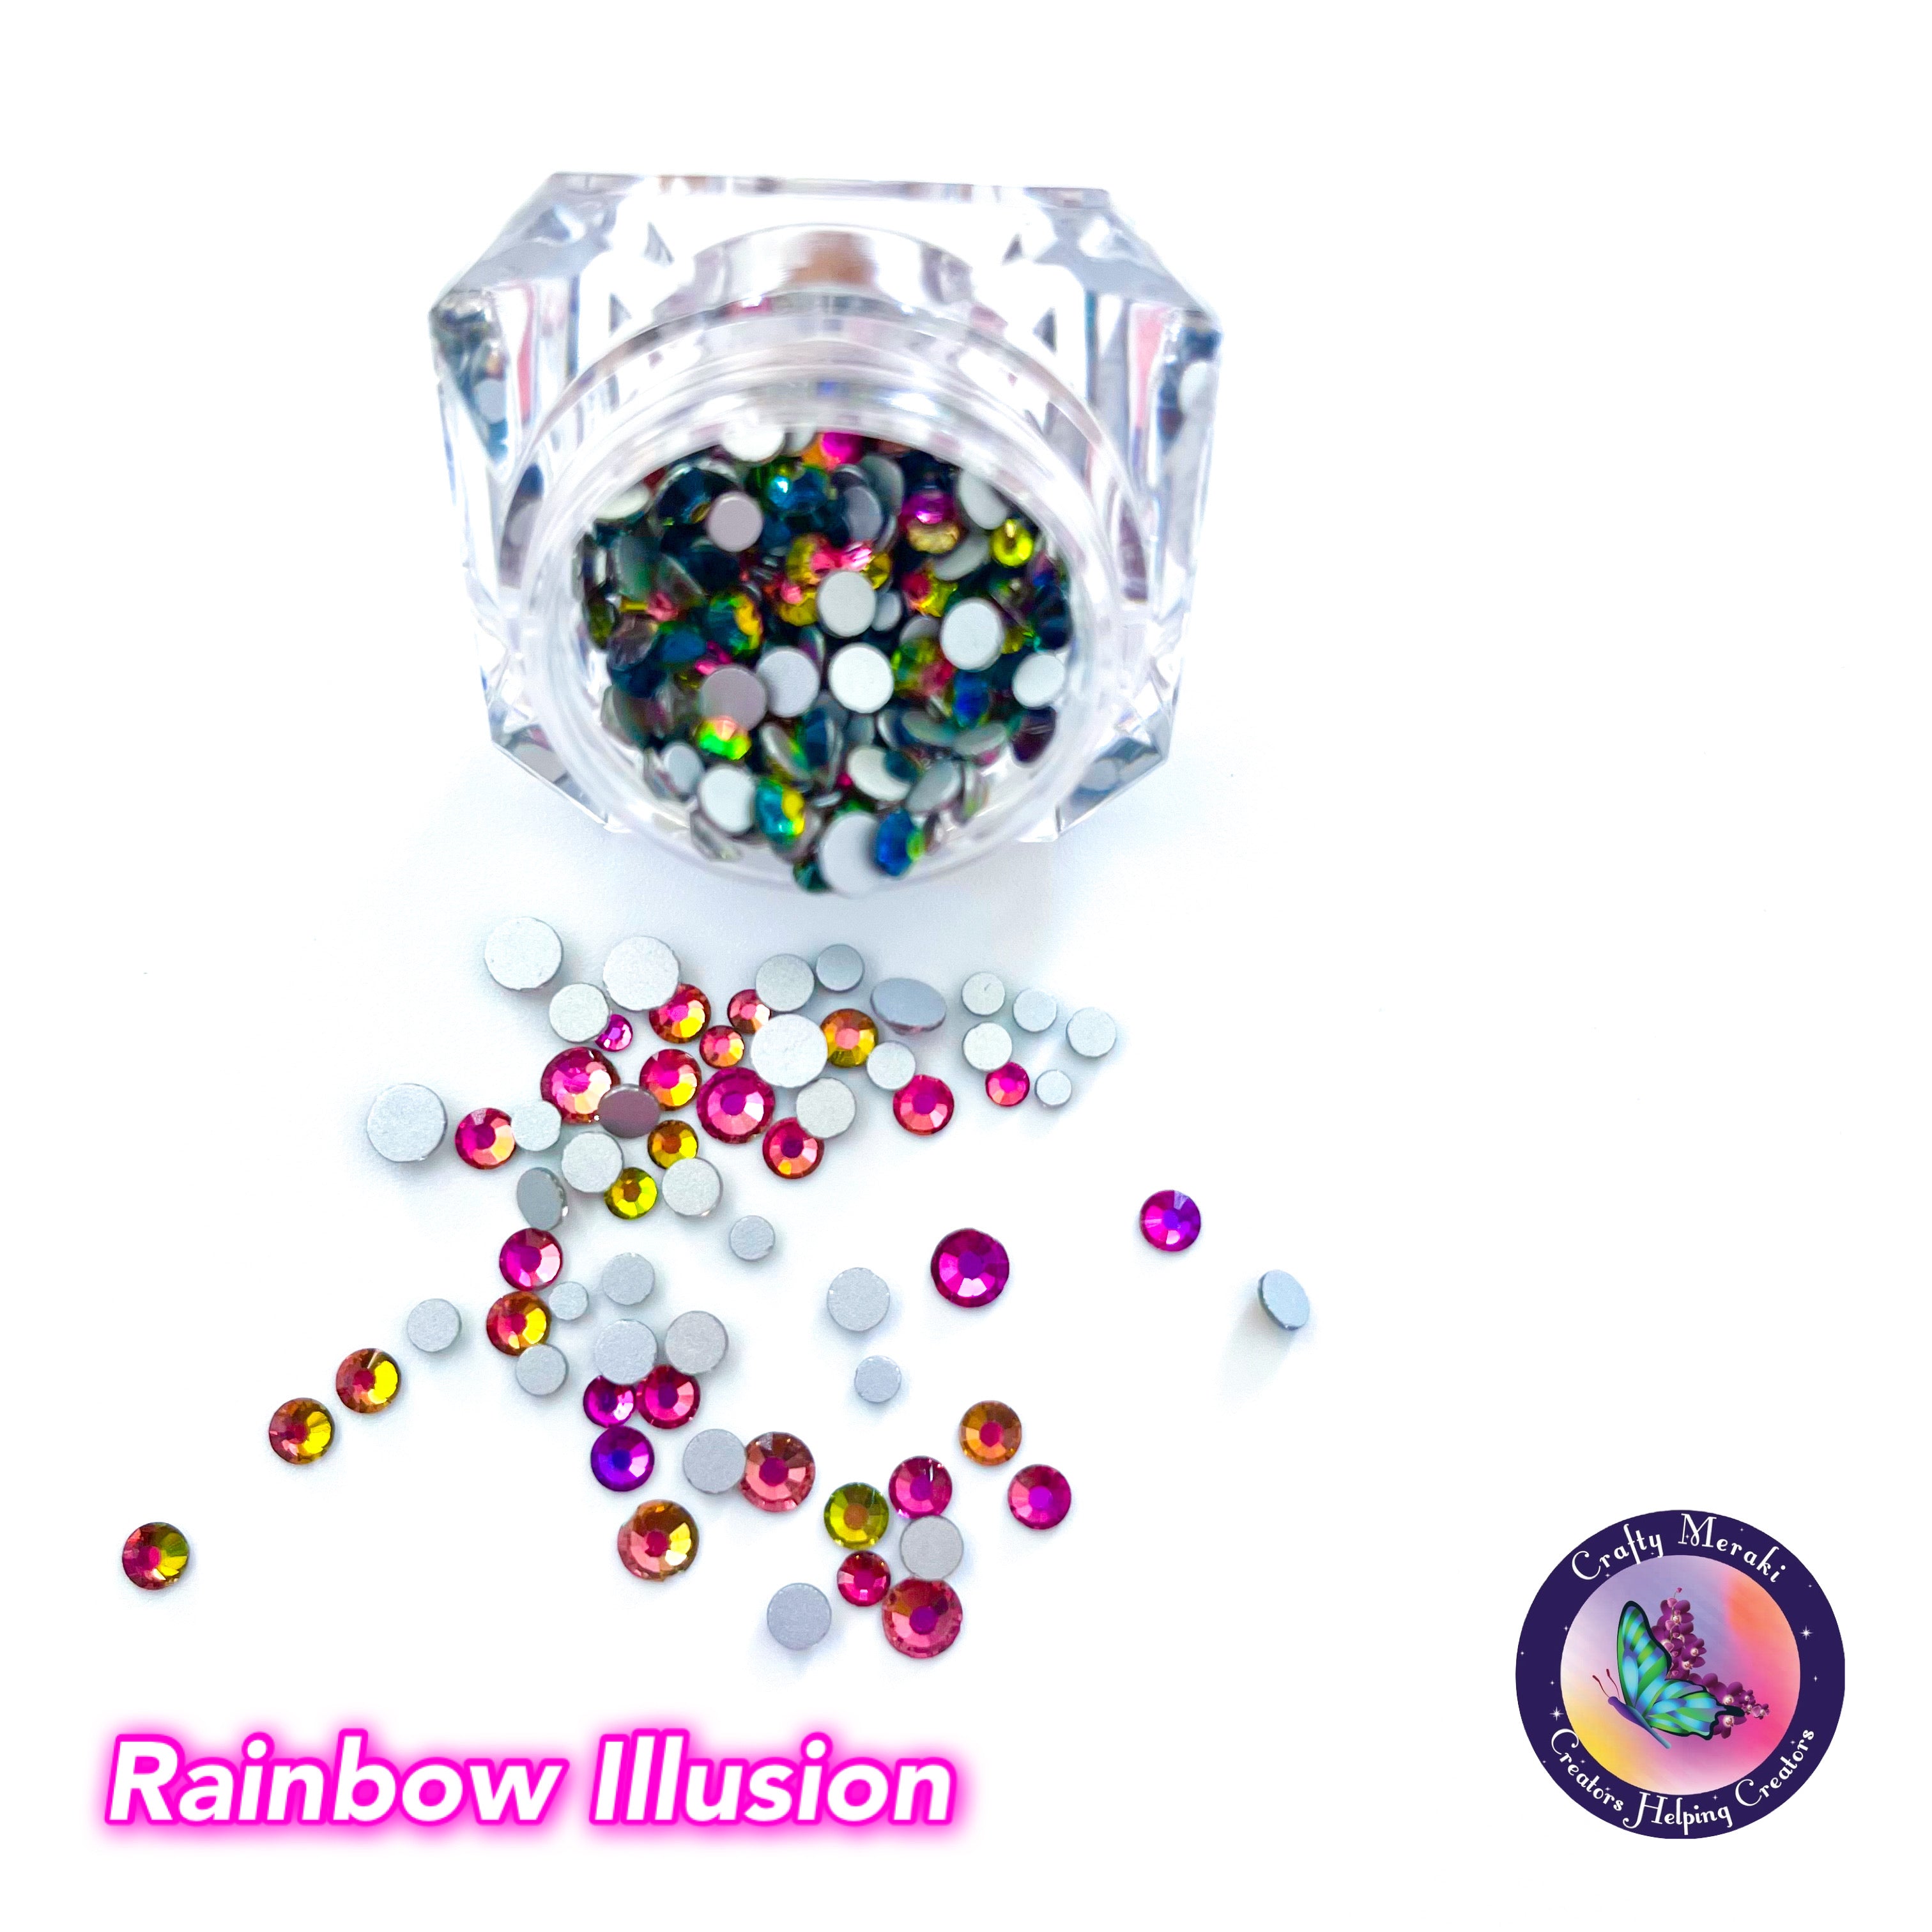 Meraki Sparkle Rainbow Illusion - Crafty Meraki